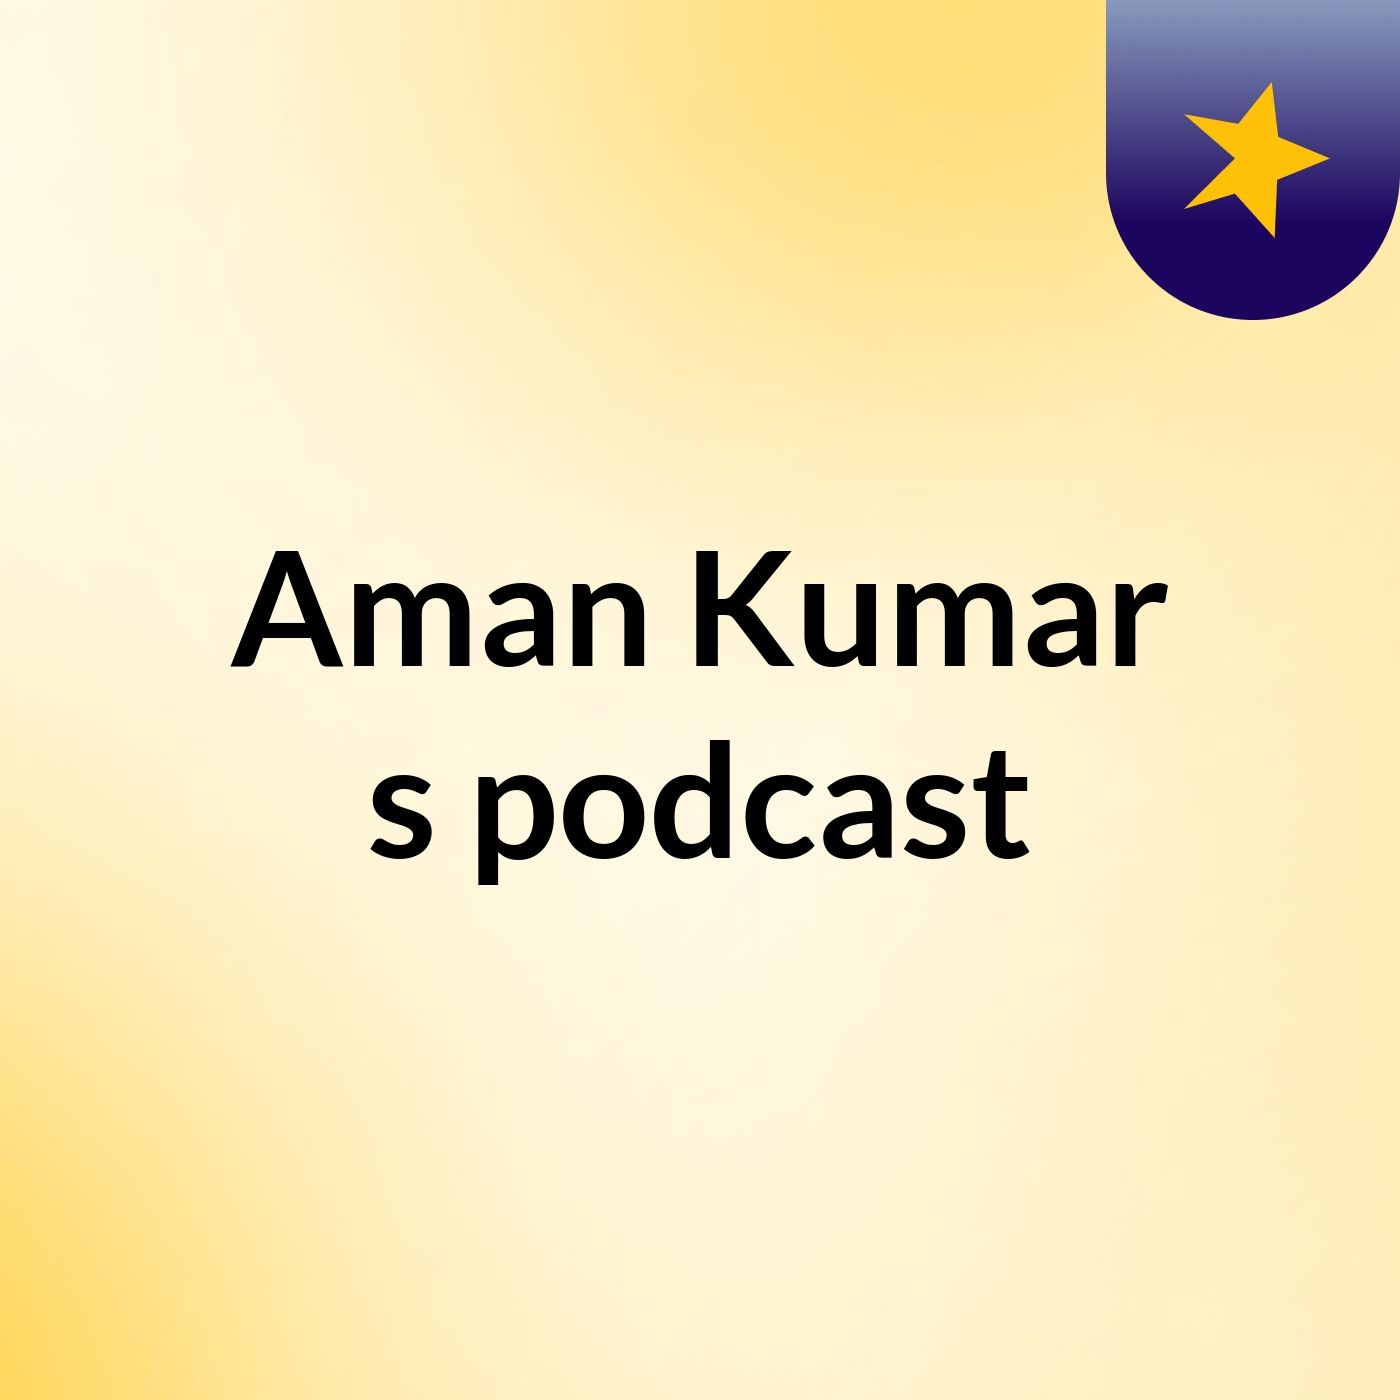 Episode 3 - Aman Kumar's podcast